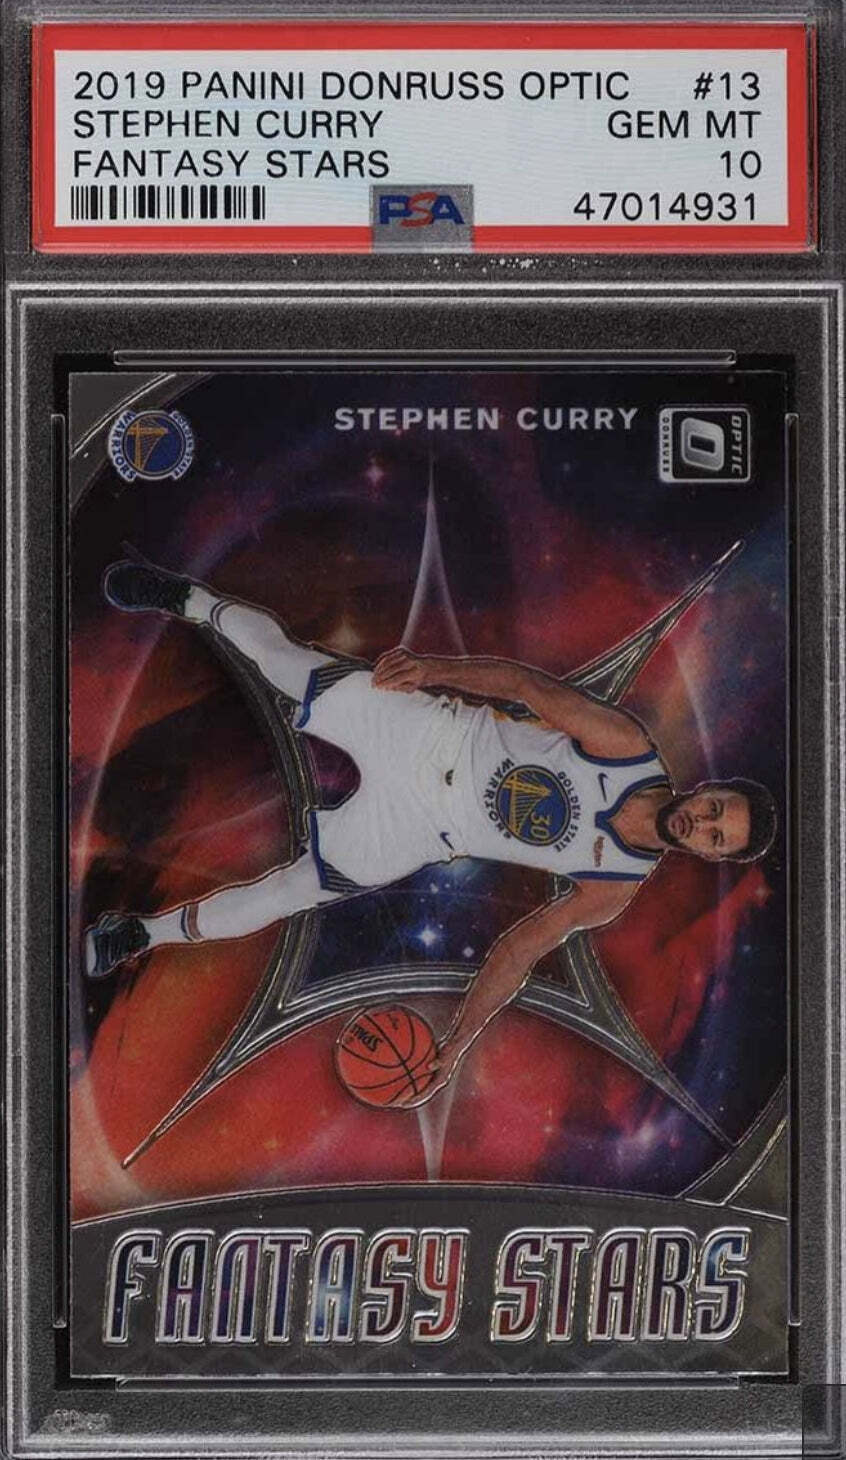 Graded 2019 Donruss Optic Stephen Curry #13 Fantasy Stars Basketball Card PSA 10 Image 1